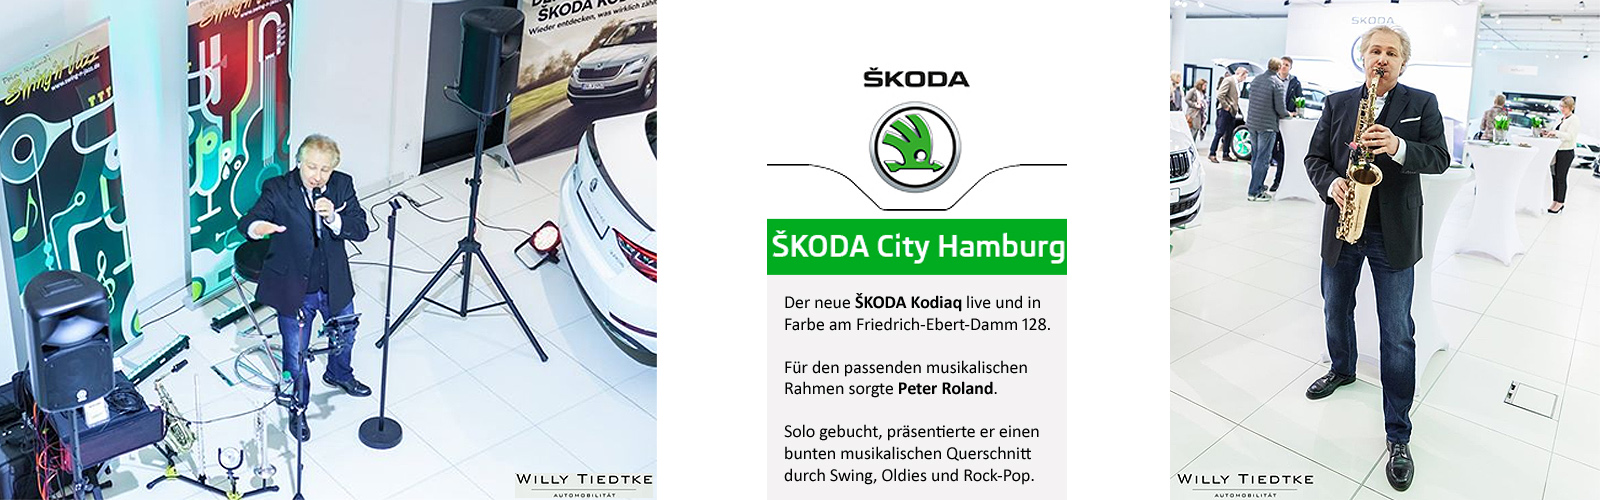 Skoda City Hamburg, Peter Roland Solo